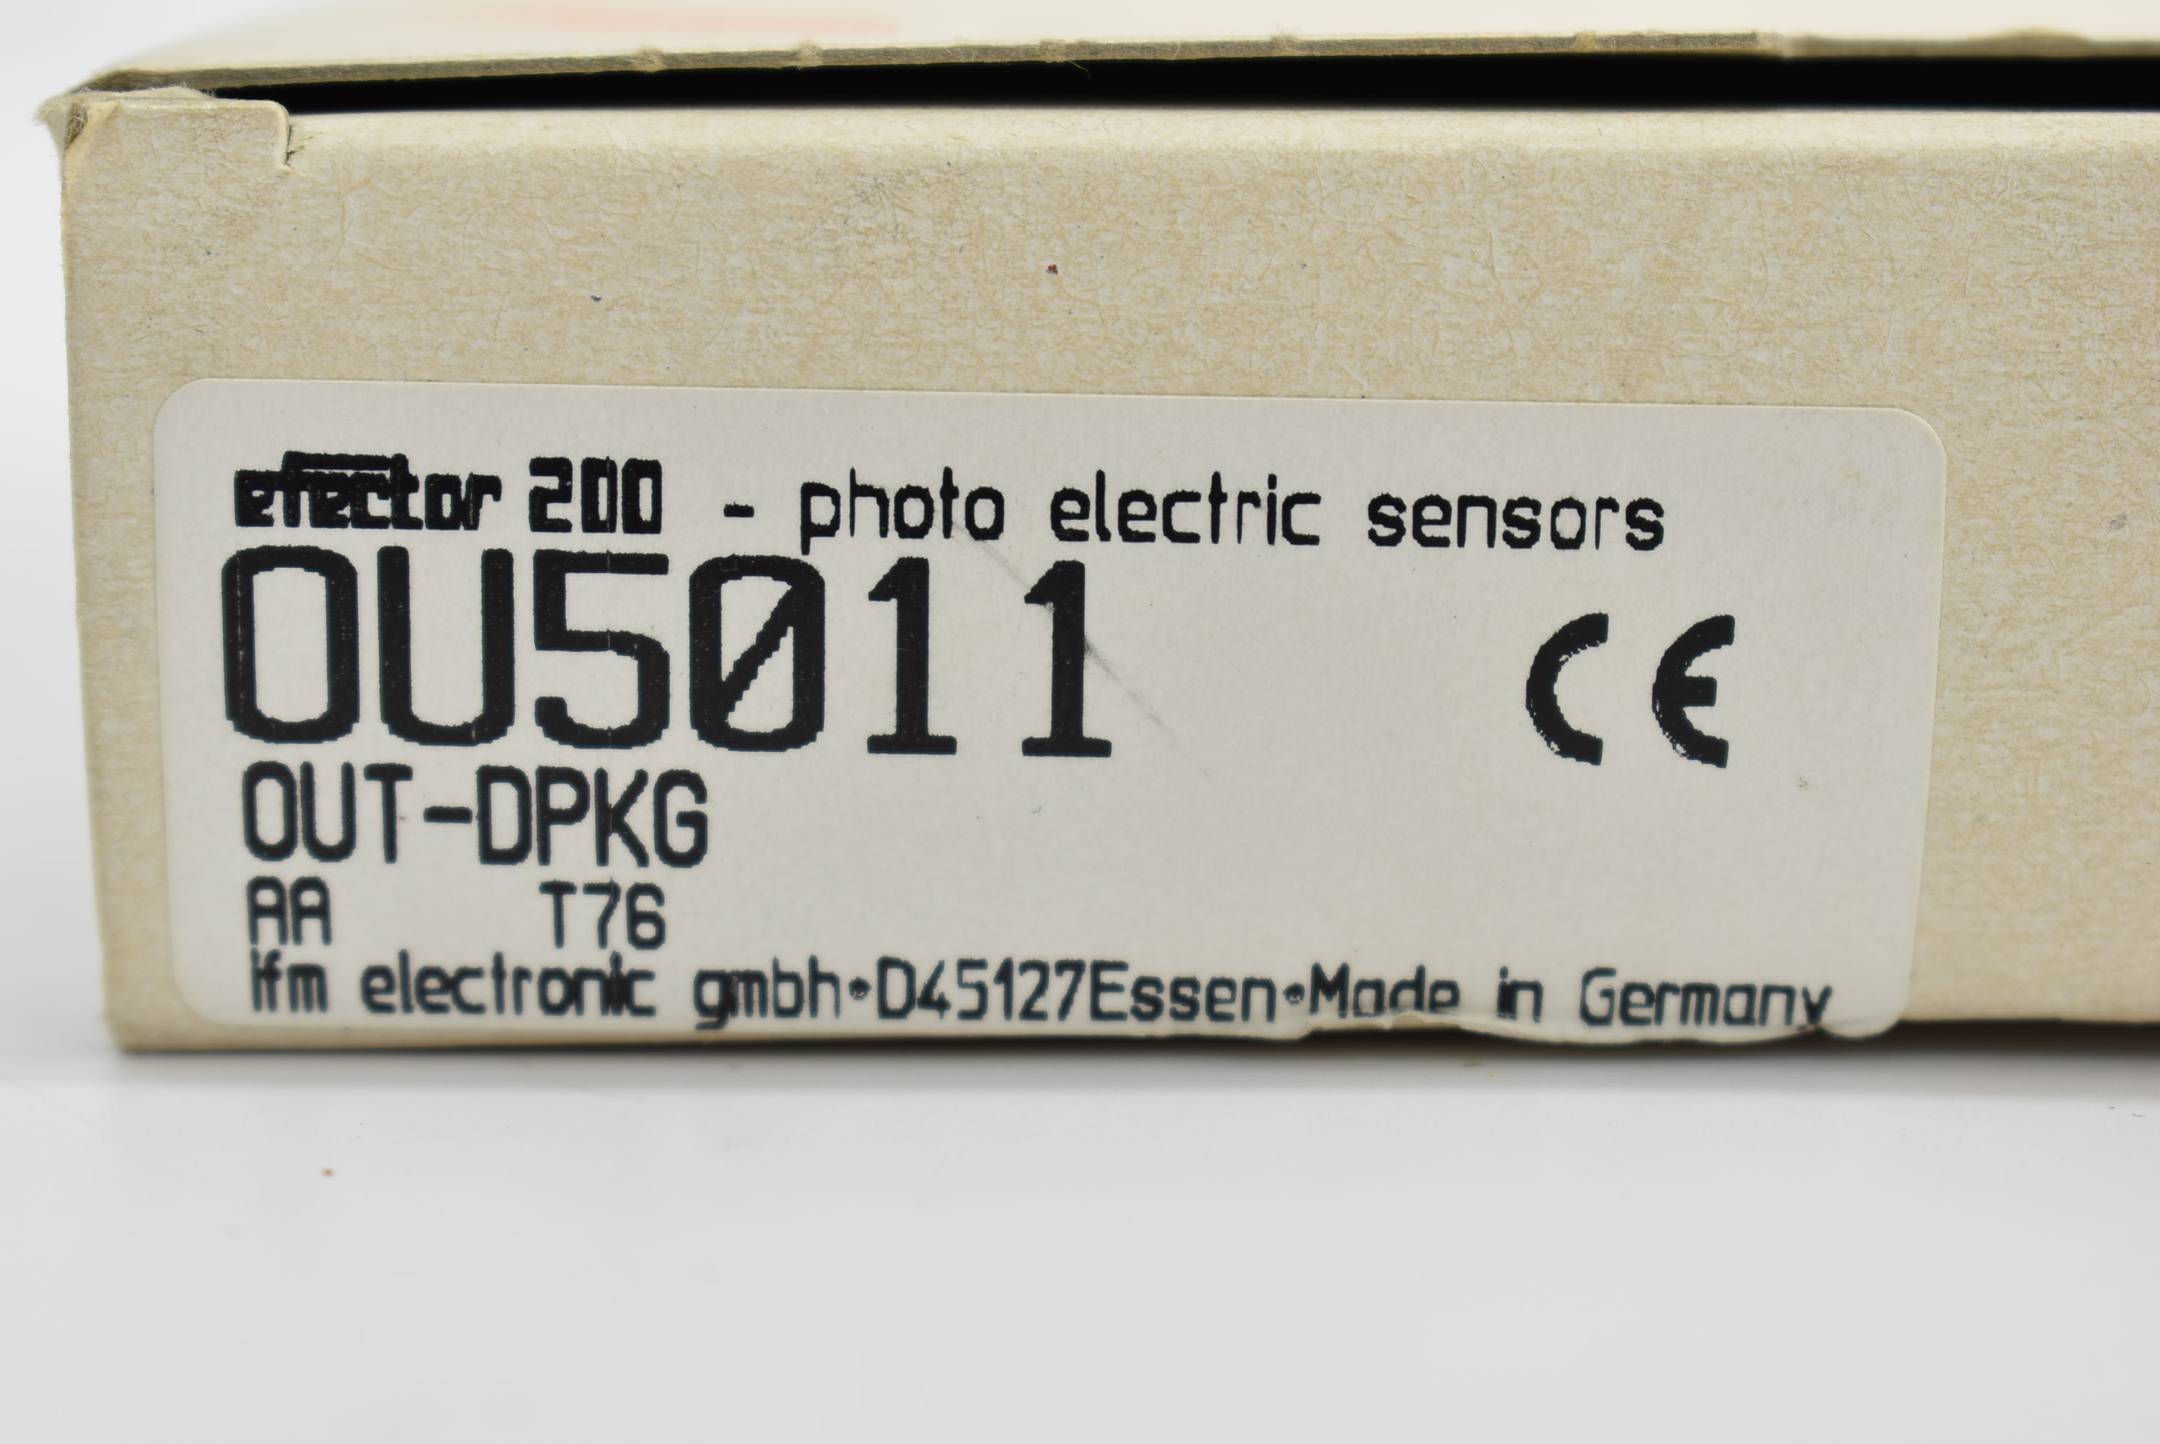 IFM efector200 photo electric sensors Reflexlichtschranke /-taster OU5011